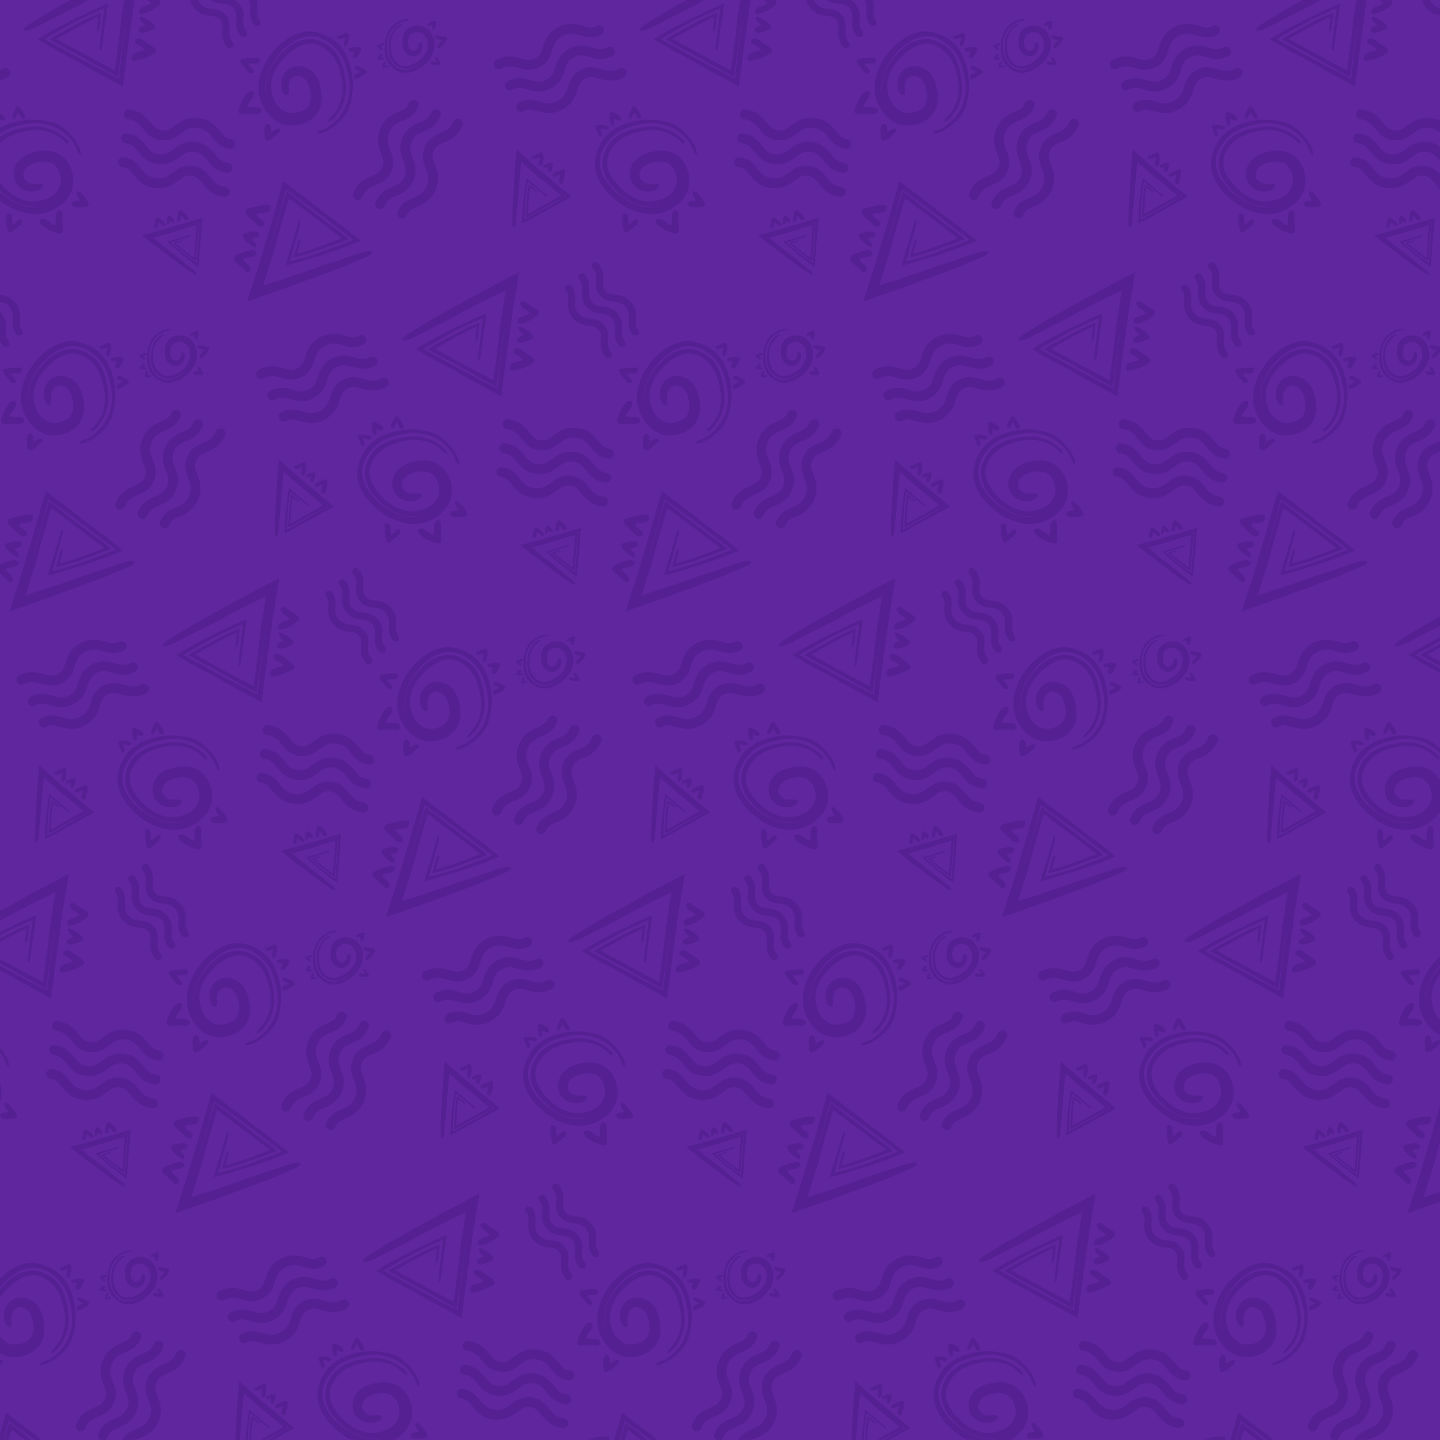 Purple textured background image